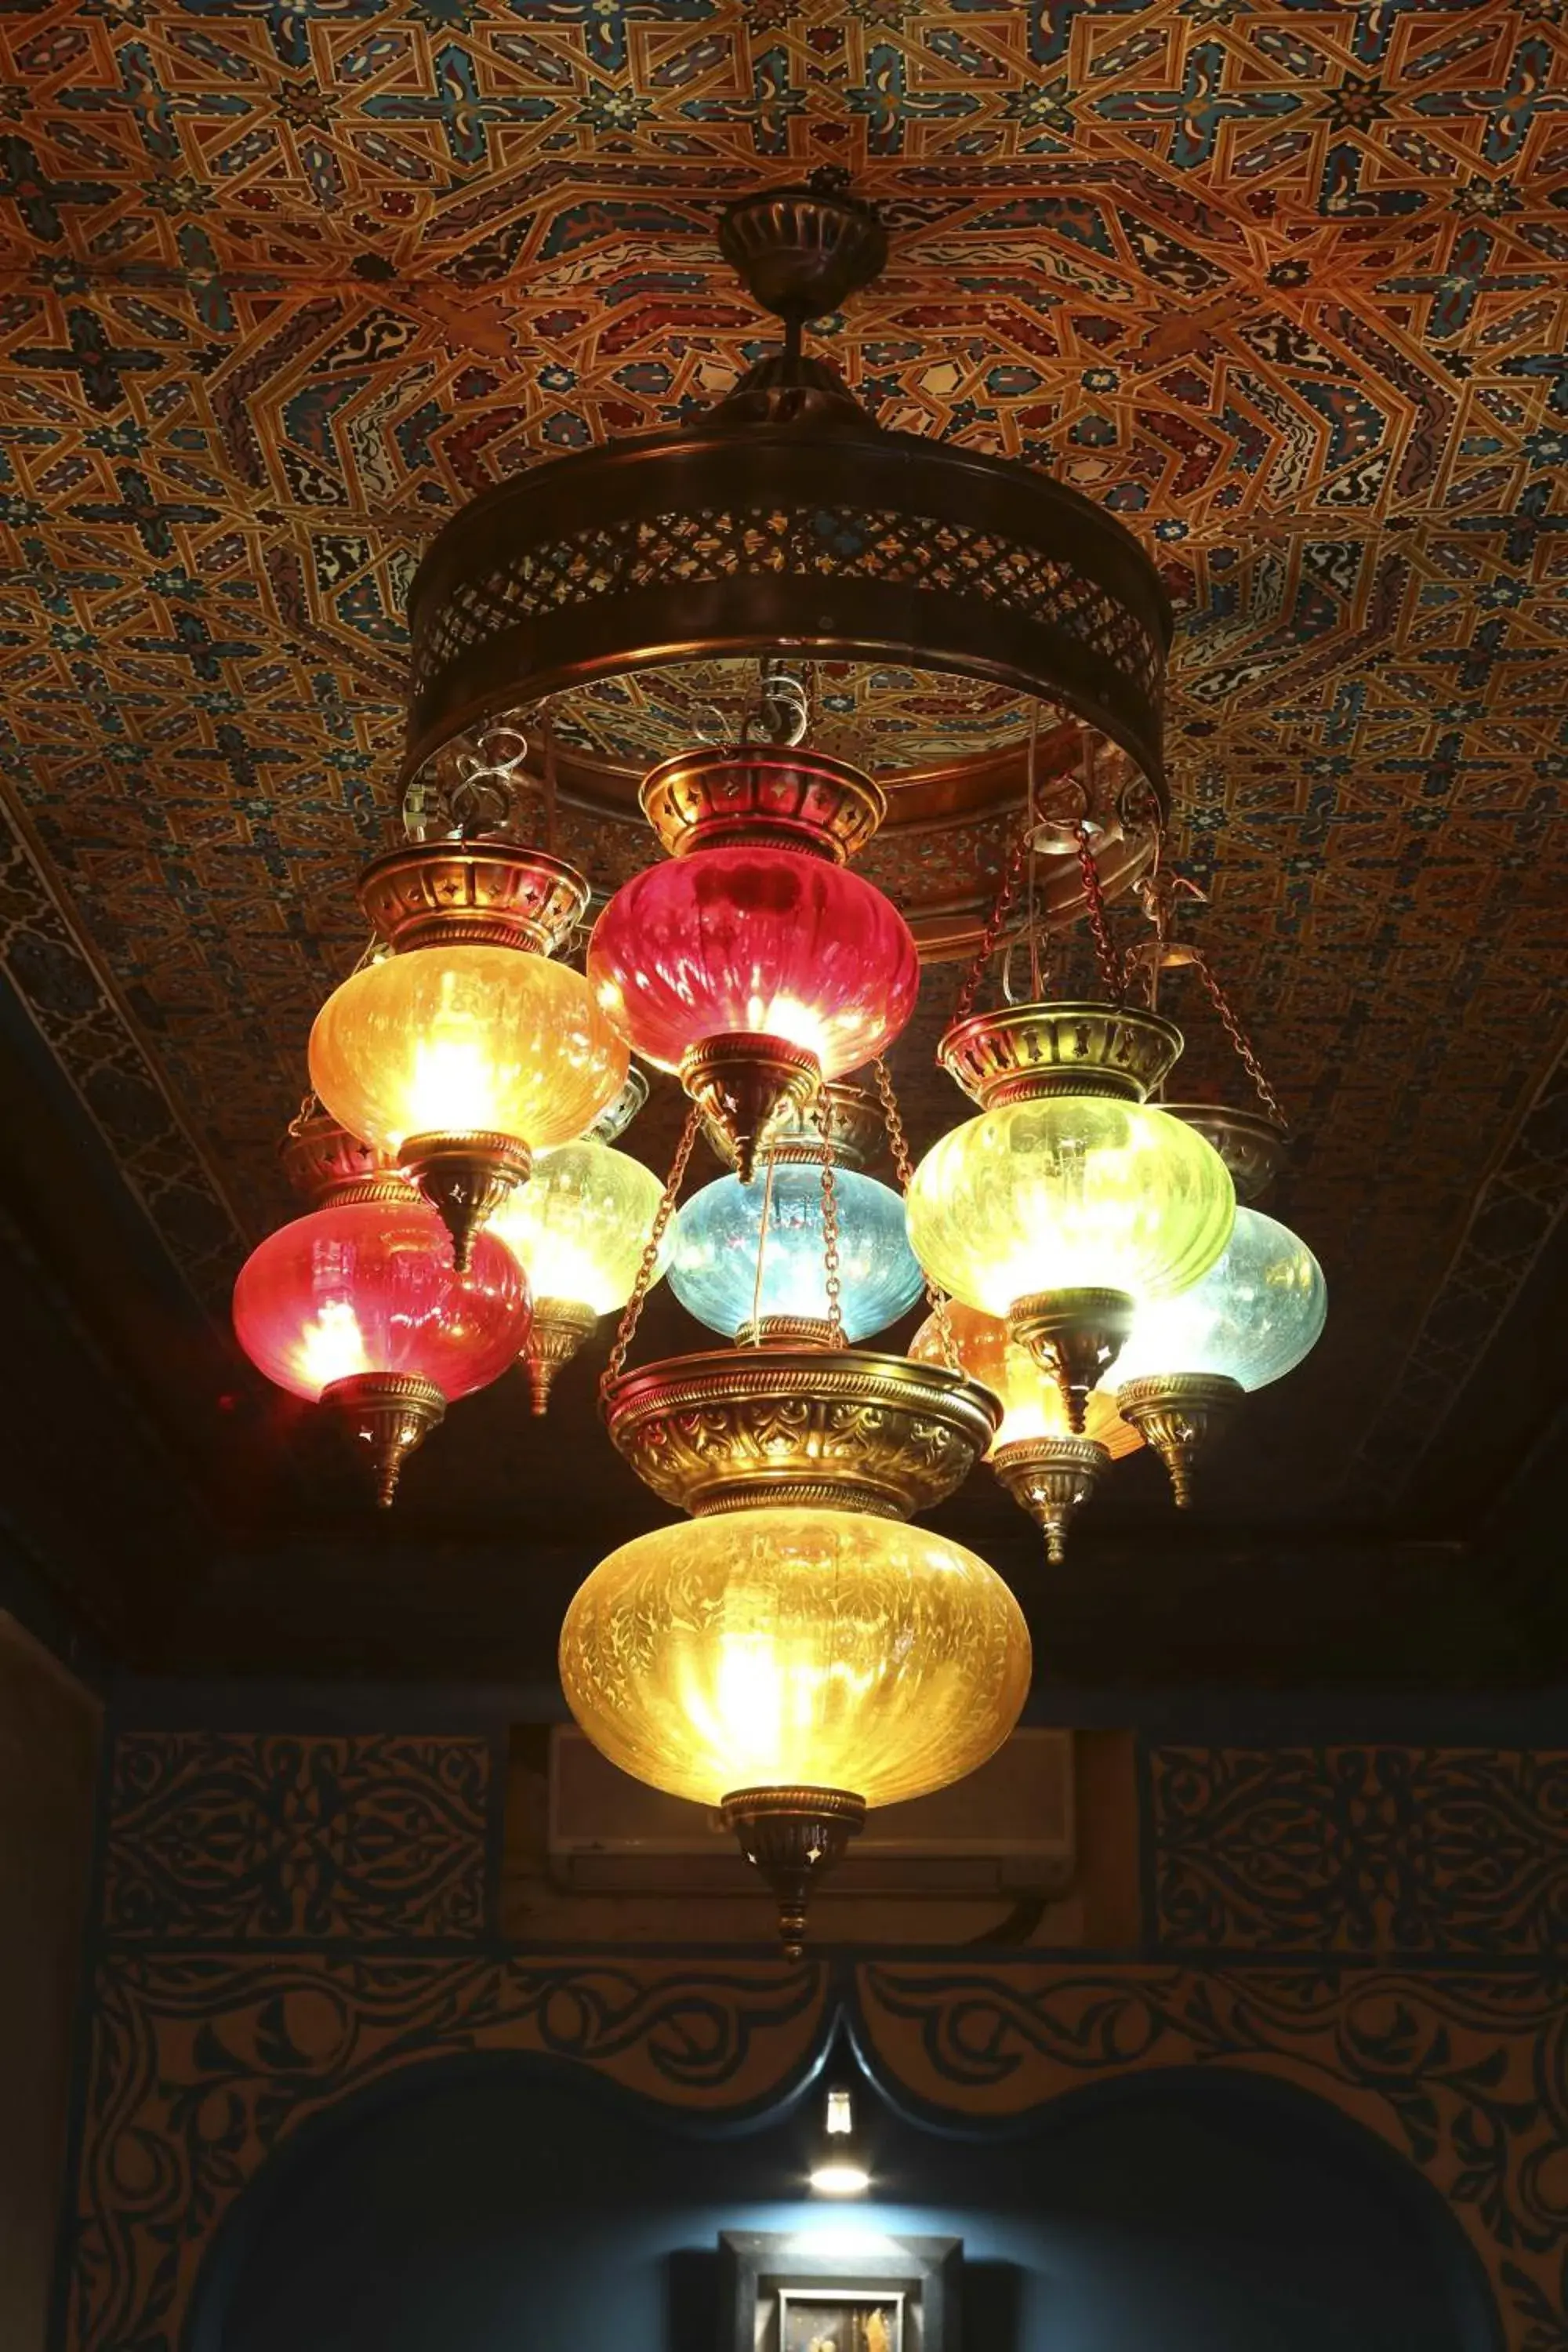 Decorative detail in Riad Mille Et Une Nuits